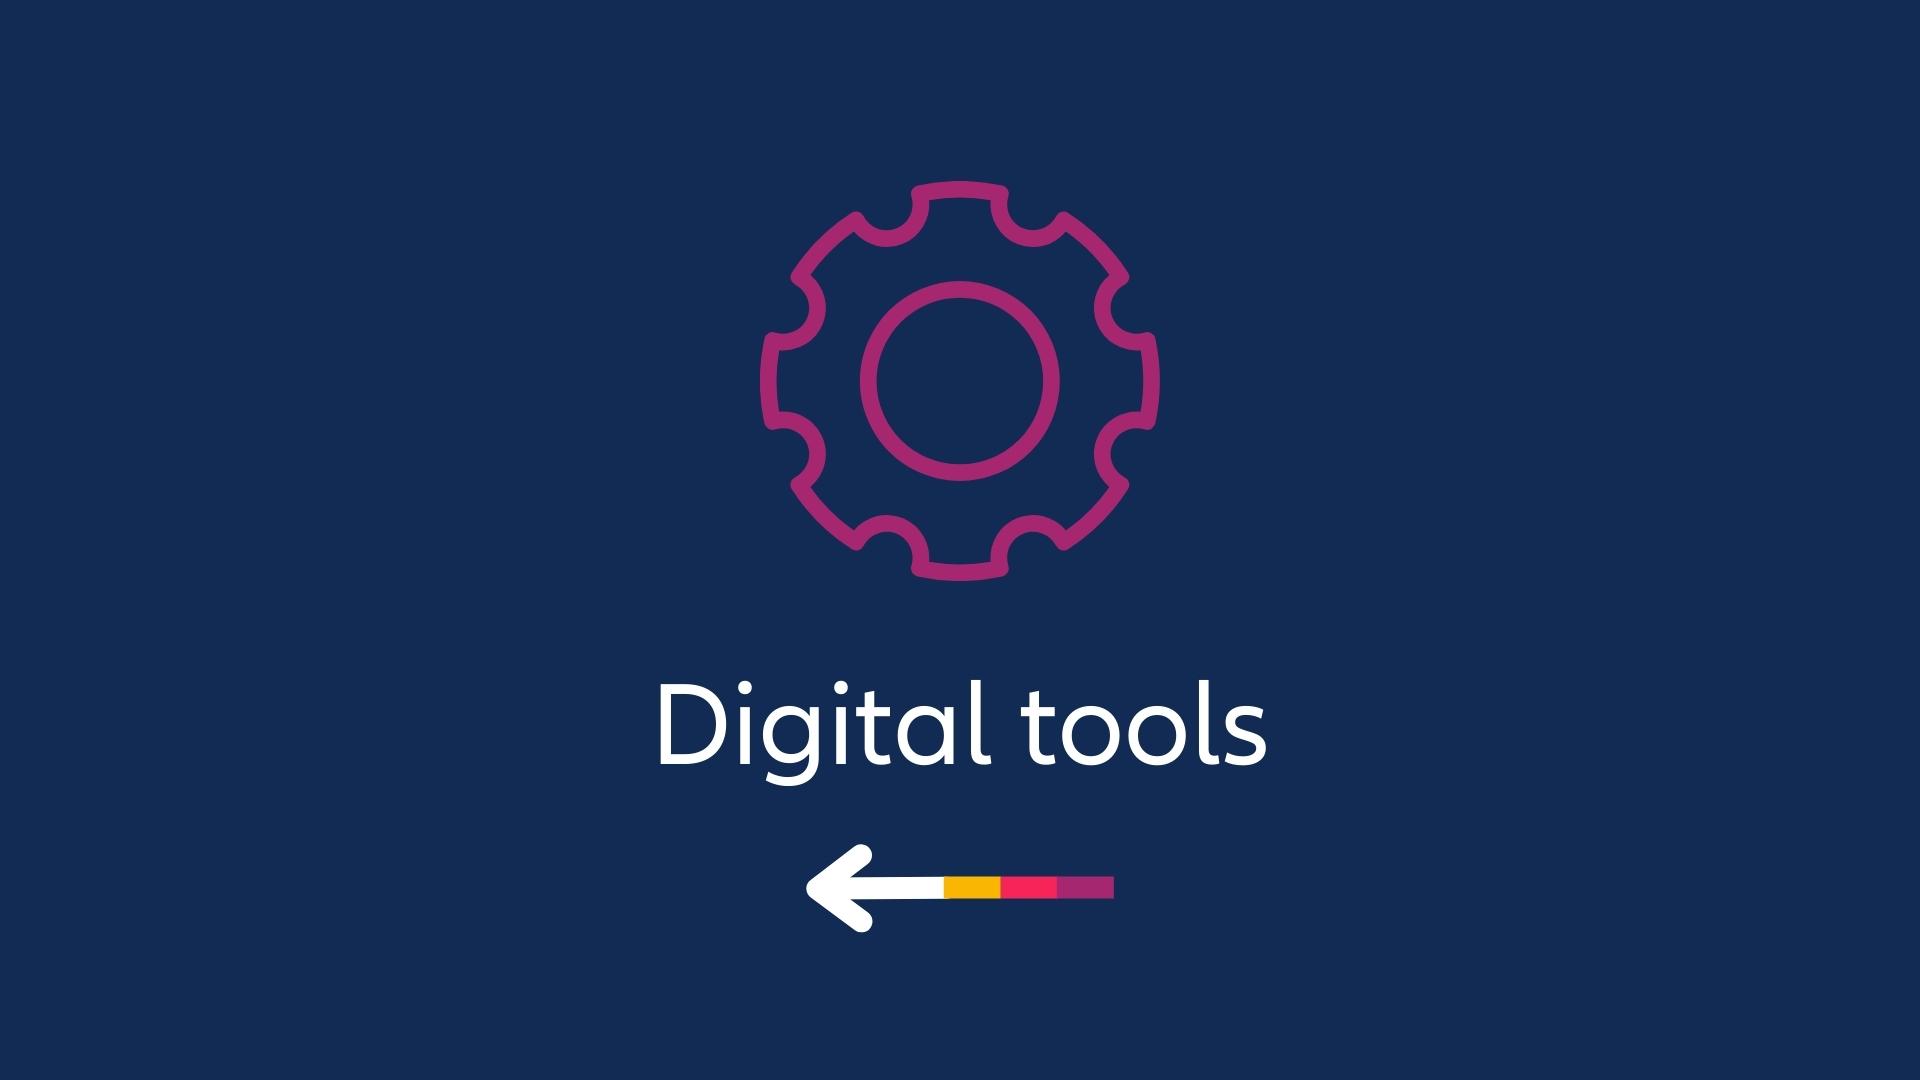 Digital tools, settings icon